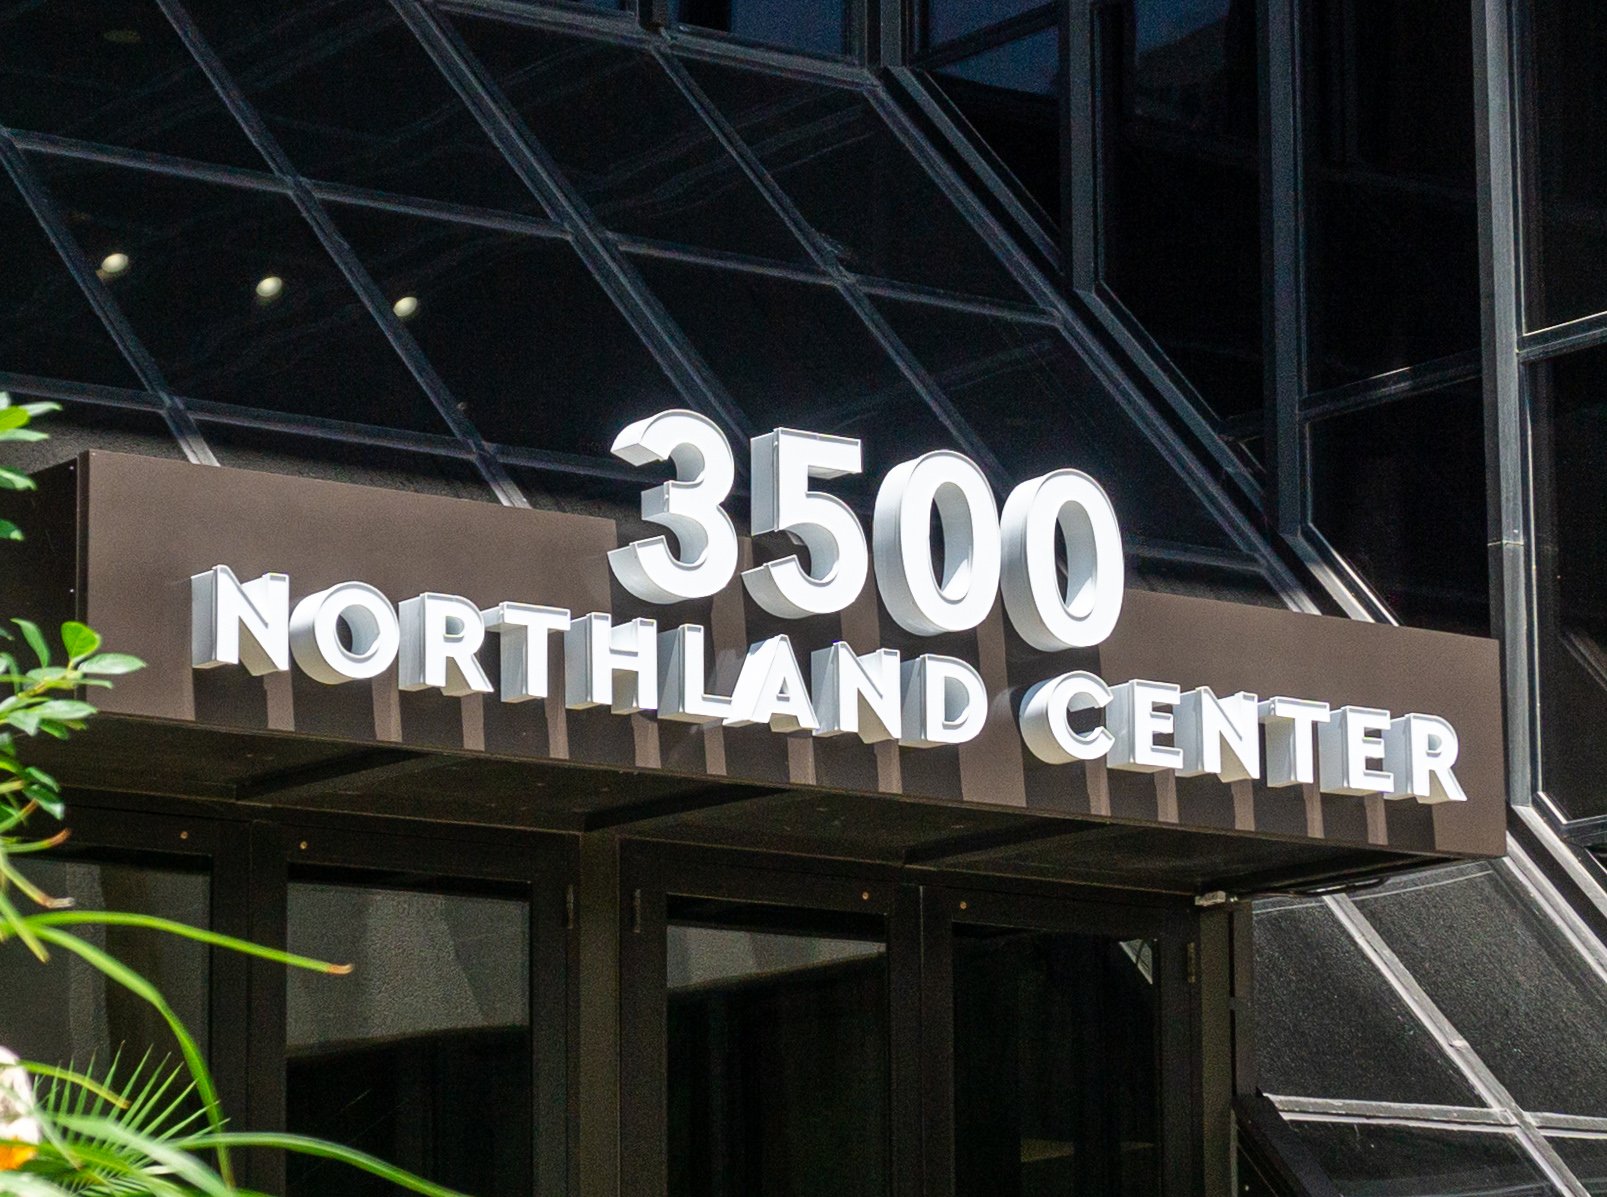 LED Face Illuminated Letters - Northland Center